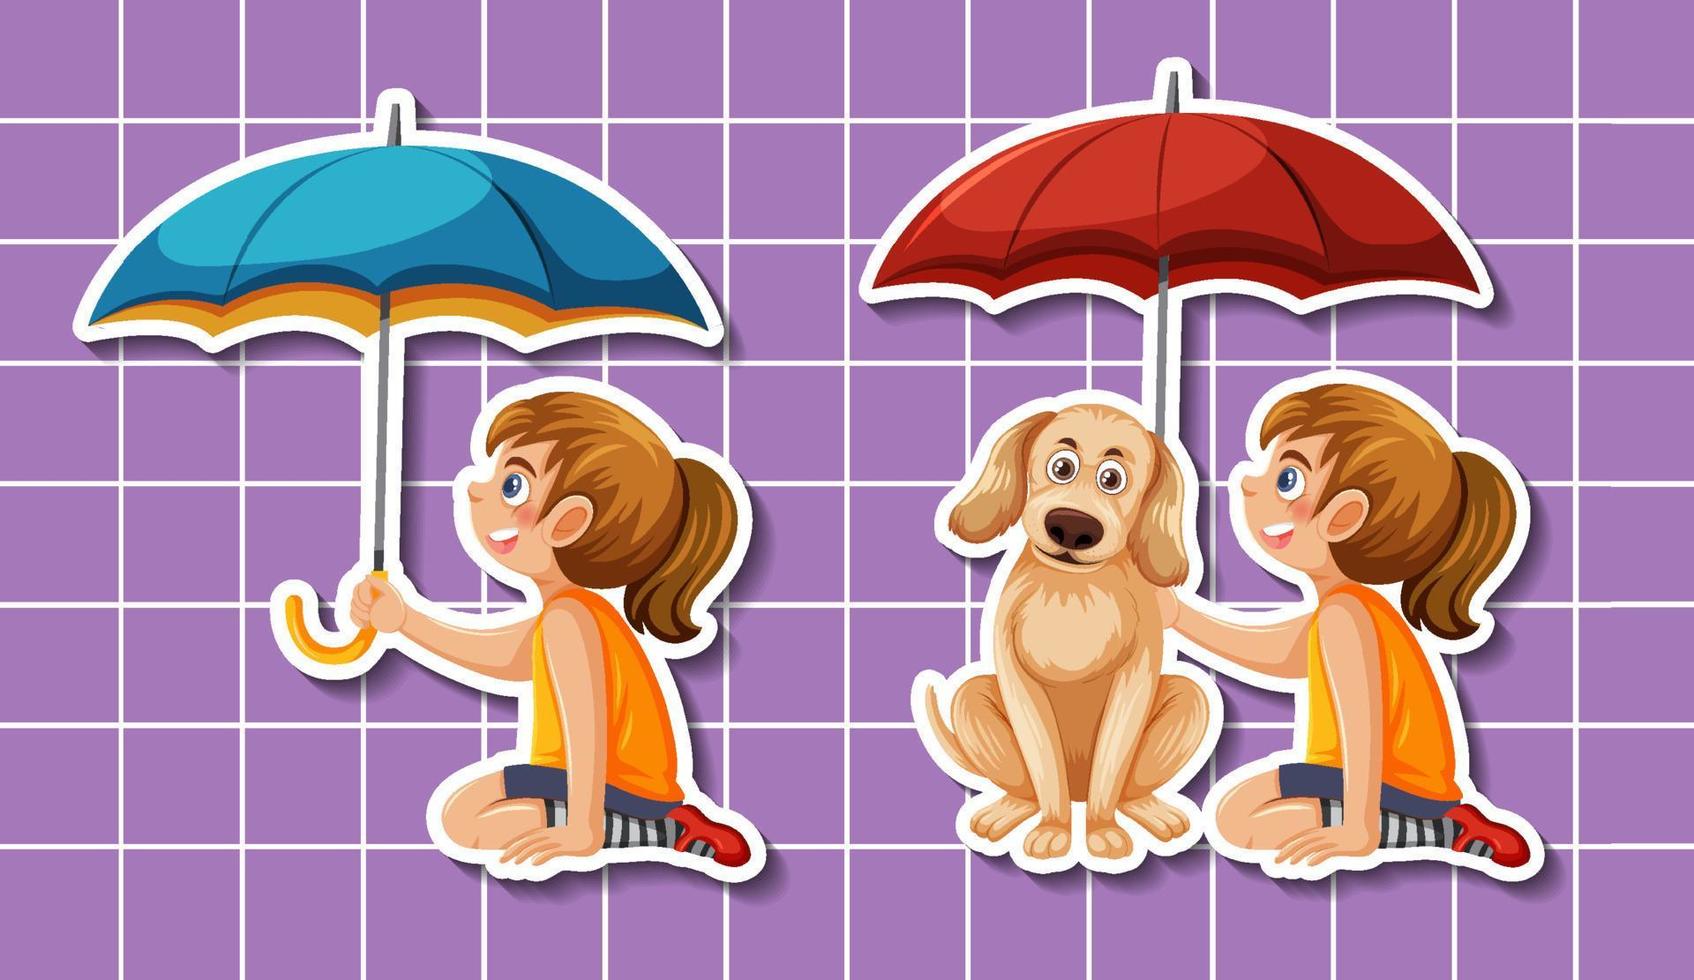 Set of cartoon character holding umbrella vector